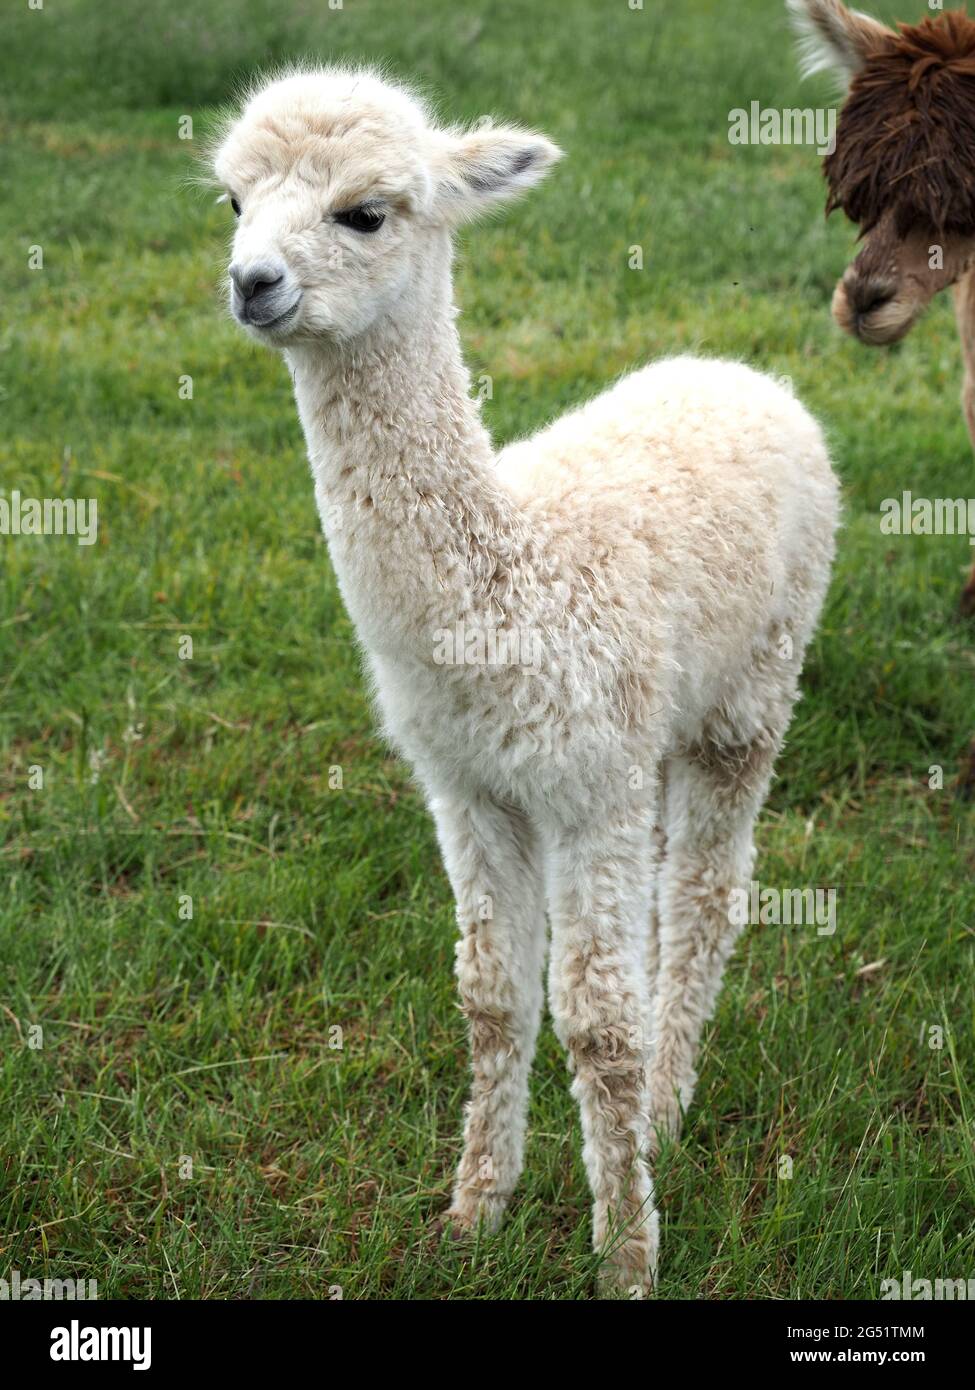 View of a cute baby Alpaca standing at an alpaca farm Stock Photo